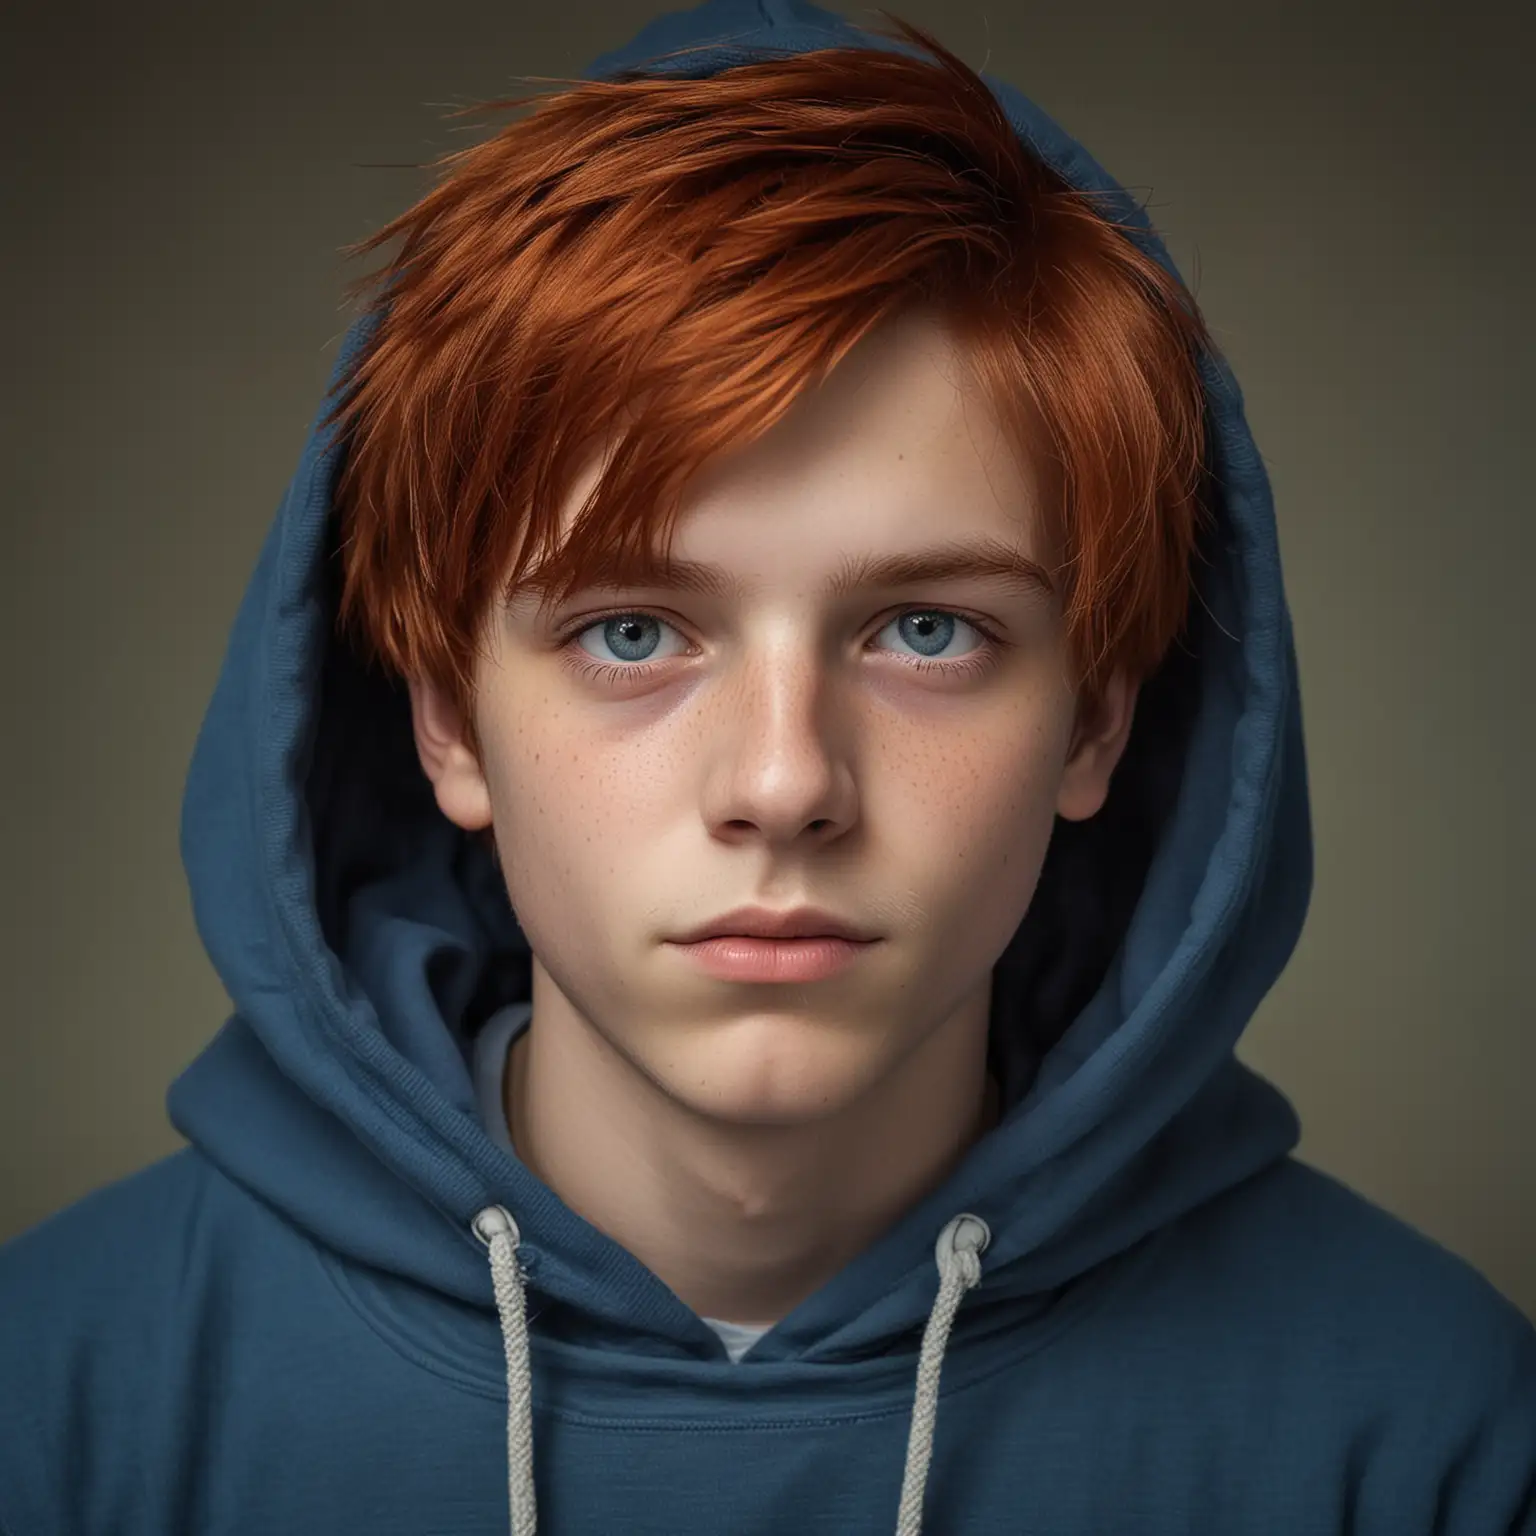 Romantic Renaissance Style Portrait of a Dreamy 16YearOld Boy in Blue Hoodie